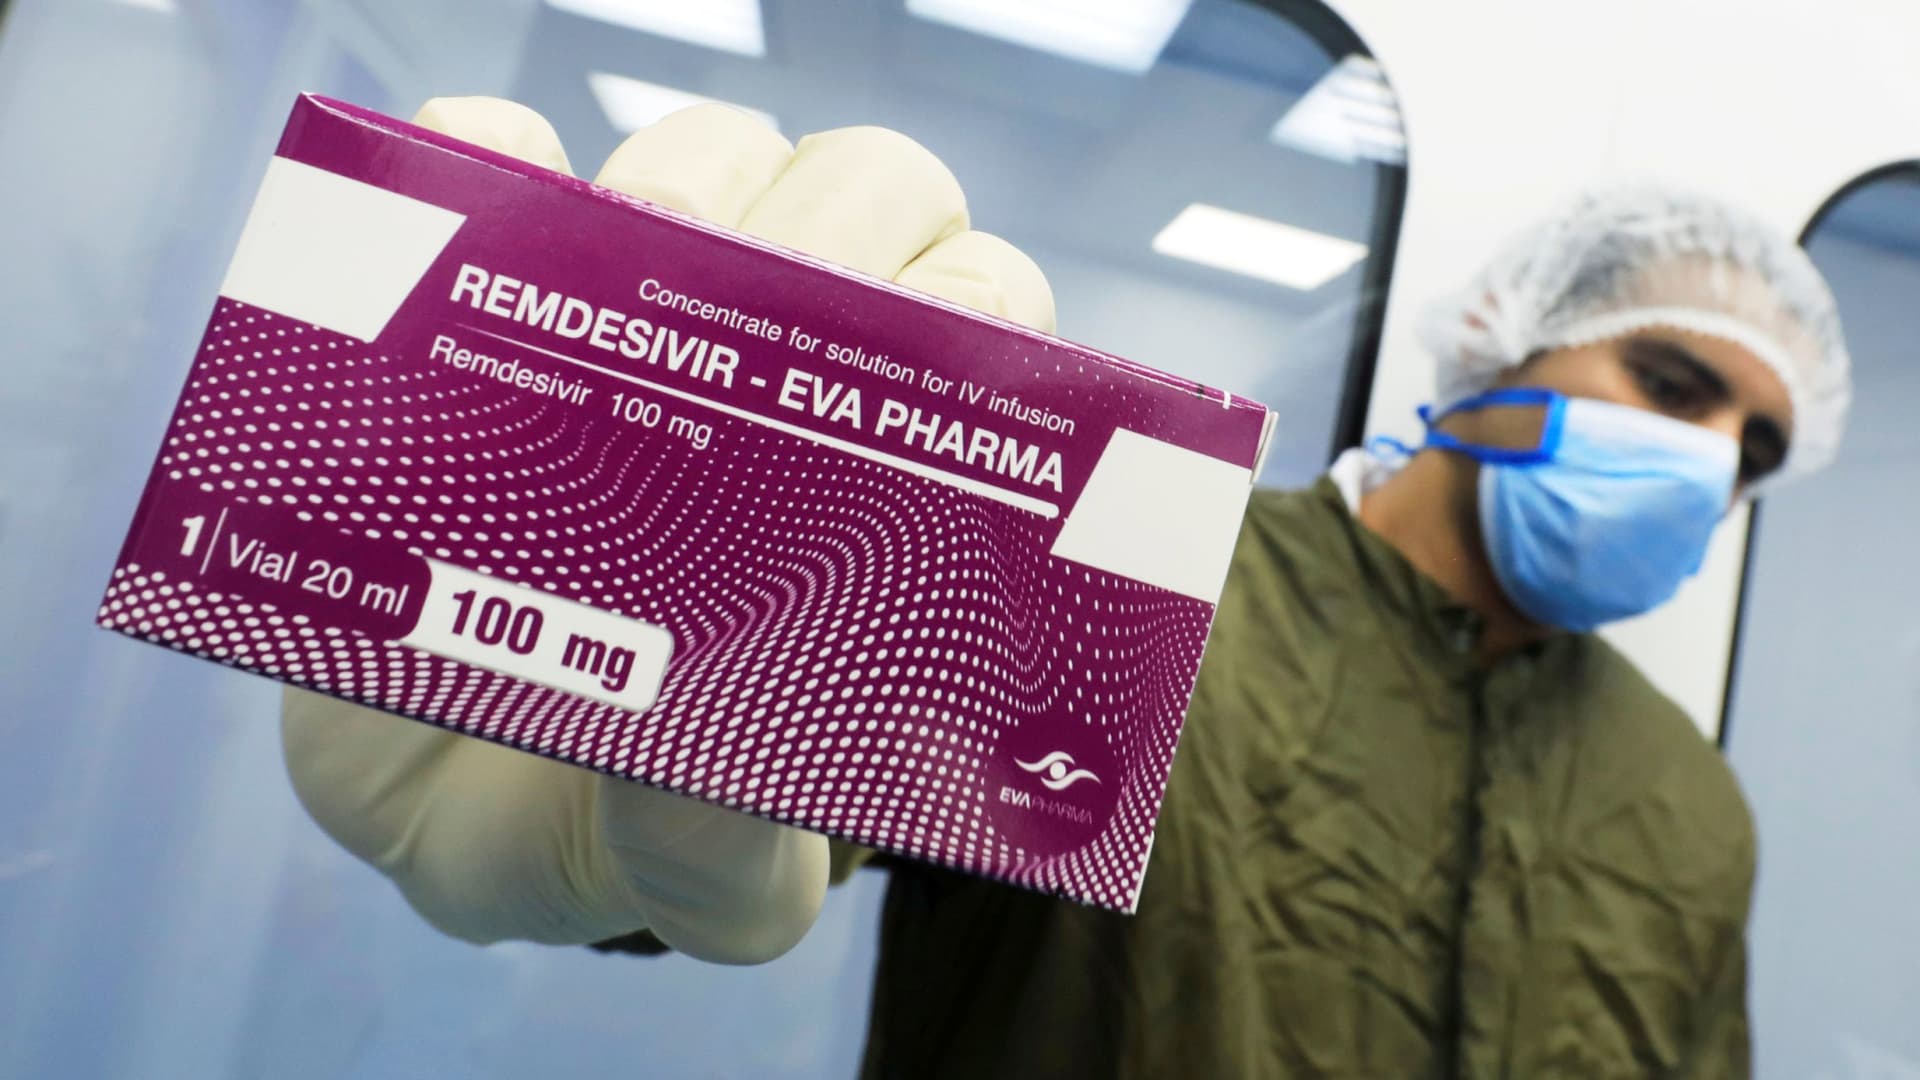 WHO tells doctors not to use Gilead's remdesivir as a coronavirus treatment, splitting with FDA